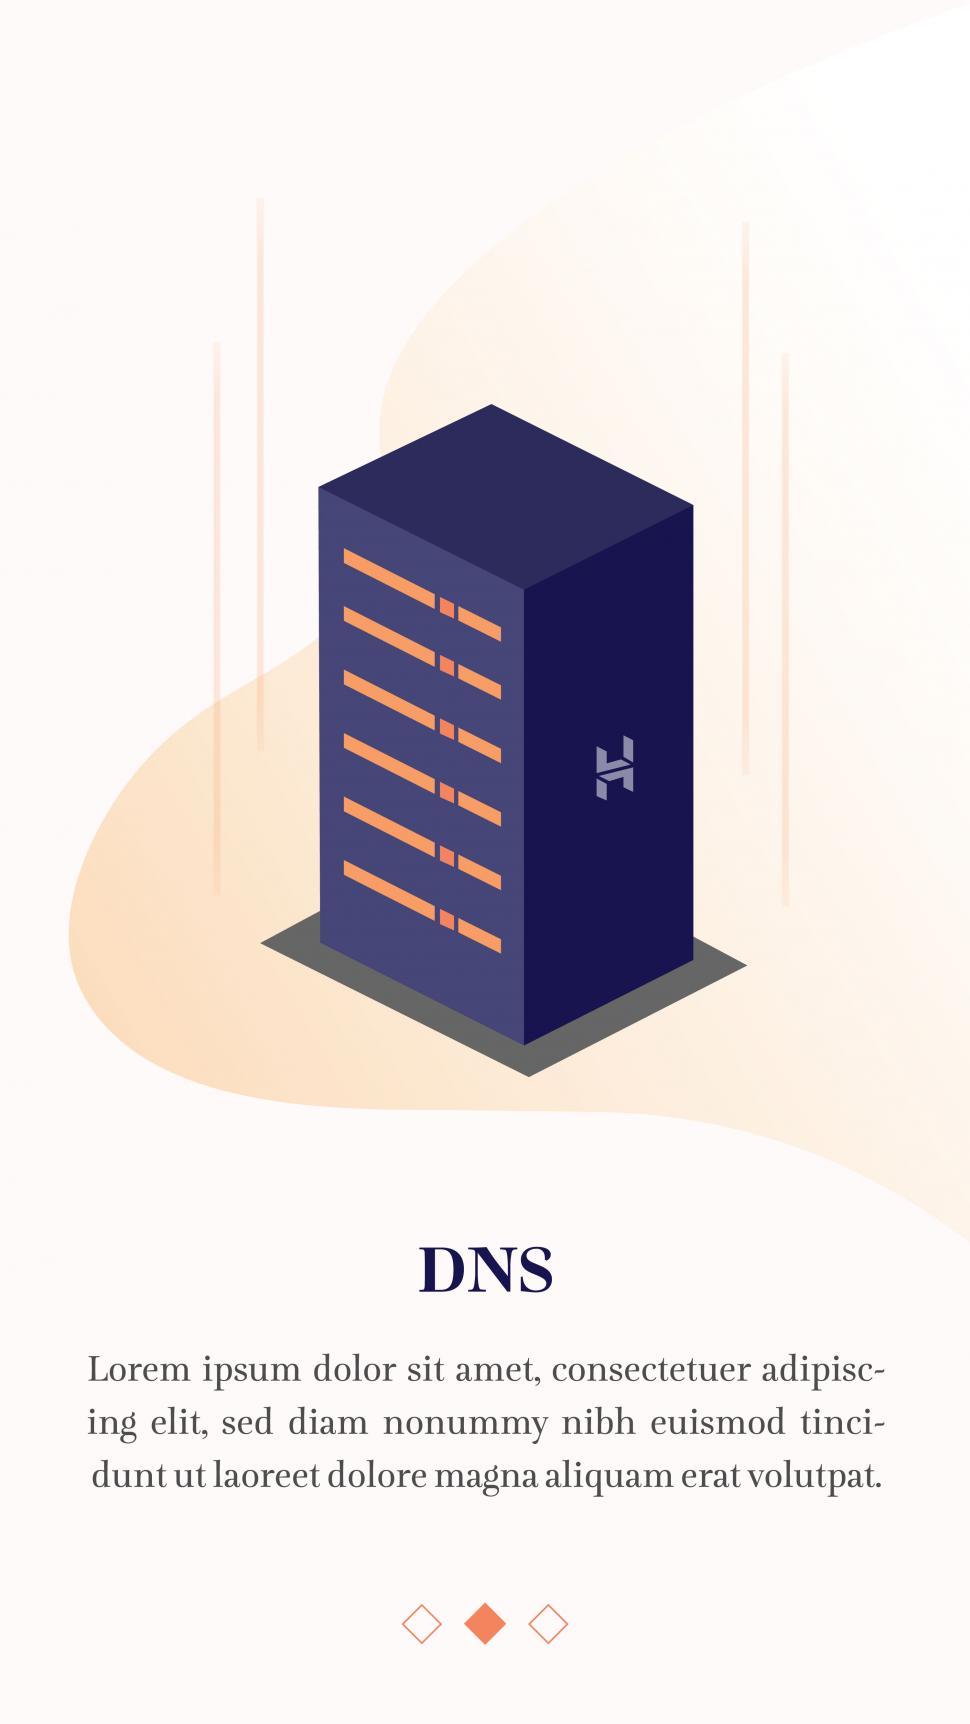 Free Image of DNS illustration  